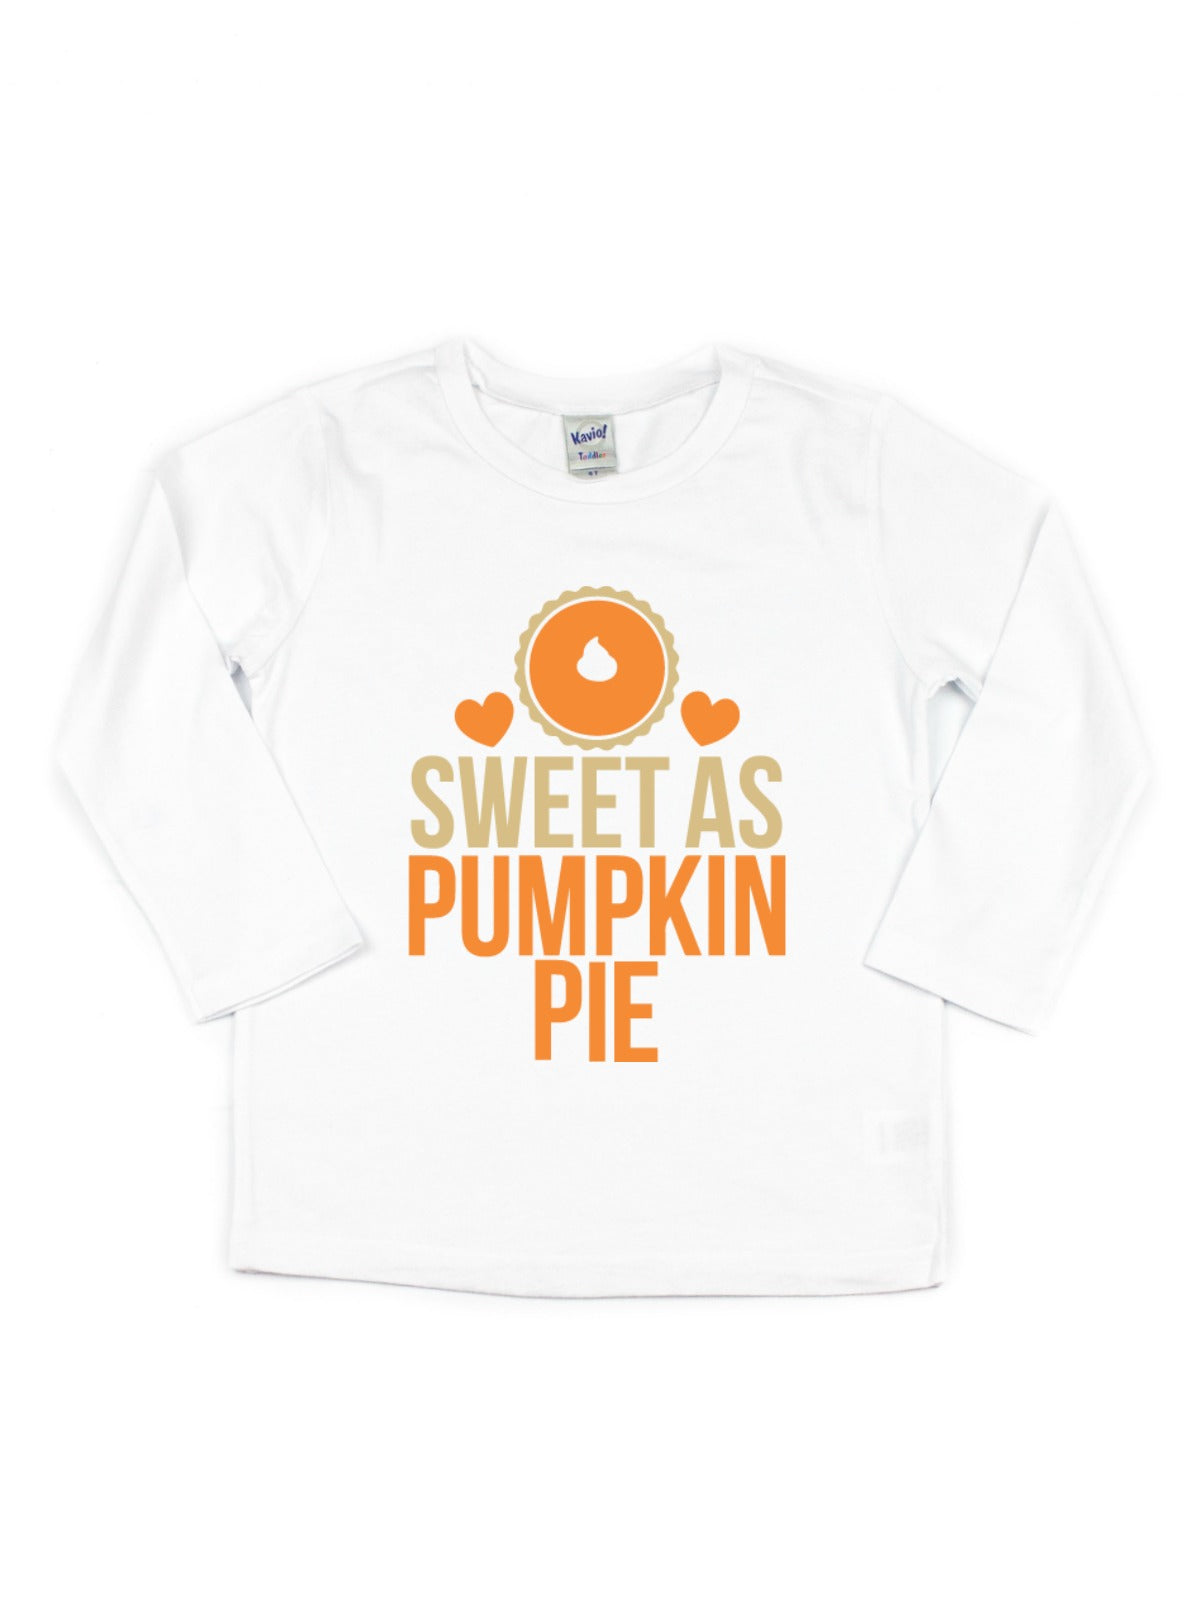 sweet as pumpkin pie thanksgiving tutu outfit